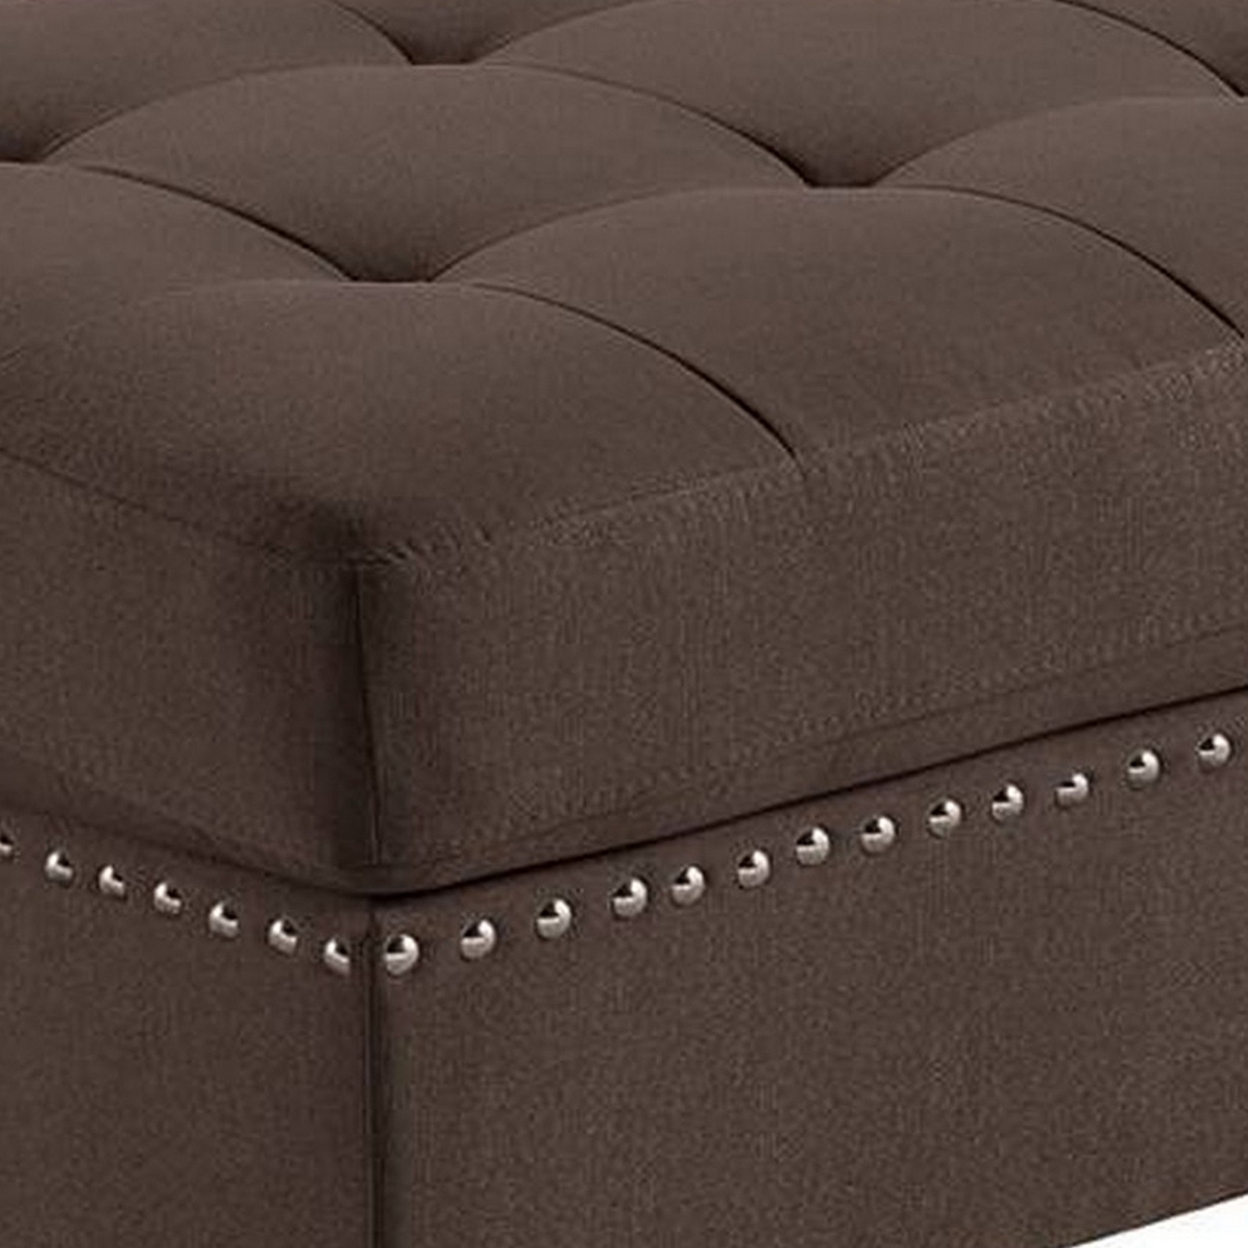 Pali 32 Inch Modern Square Ottoman, Foam Tufted Seat, Brown Linen Fabric